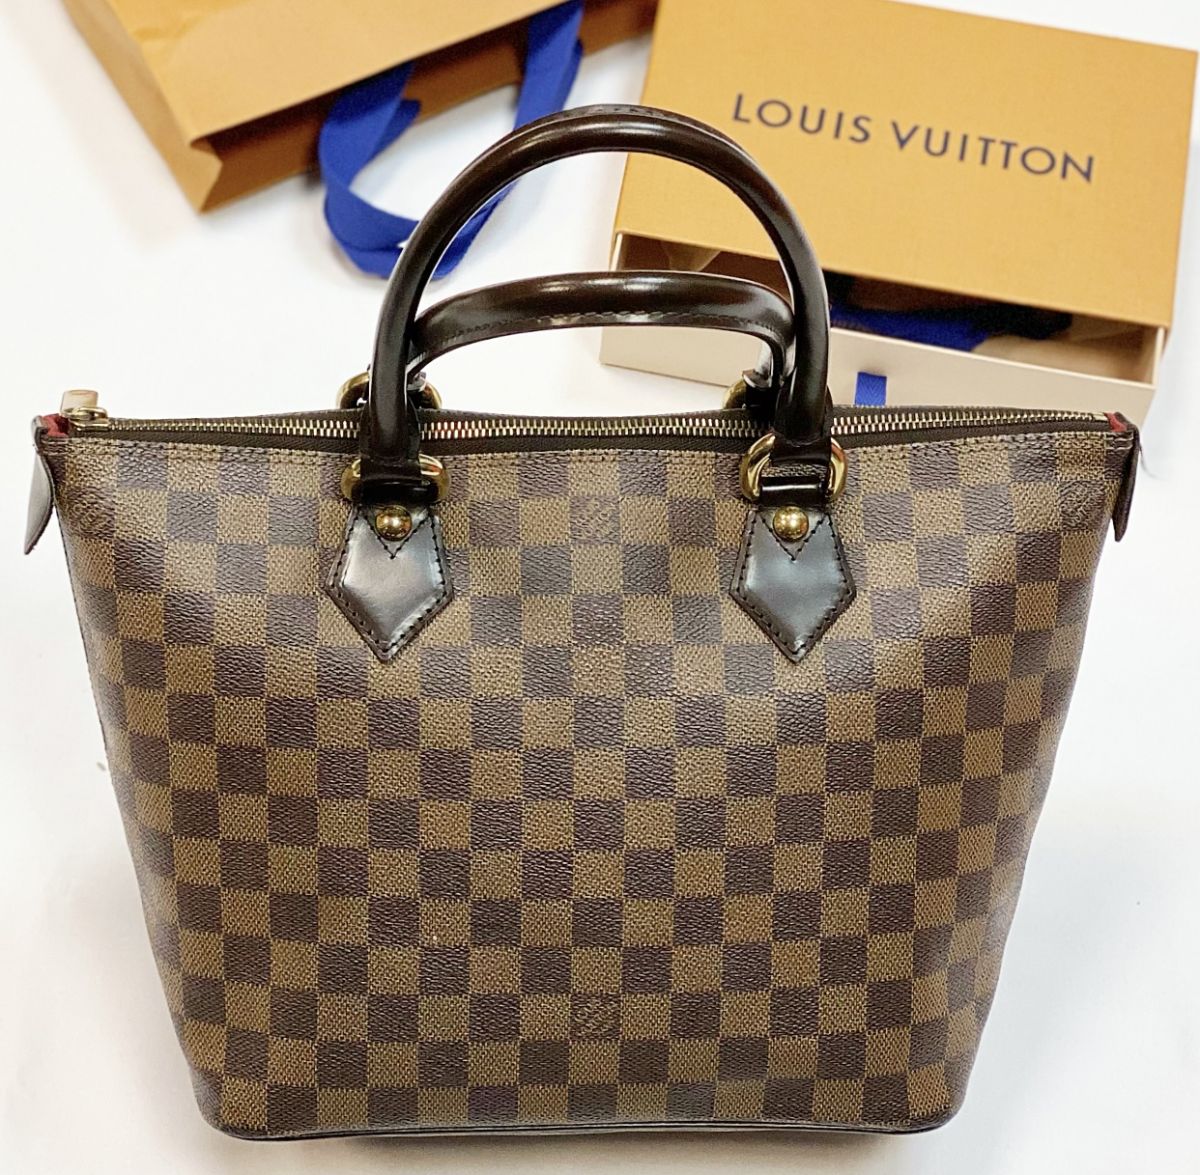 Сумка Louis Vuitton размер 35/23 цена 30 770 руб 